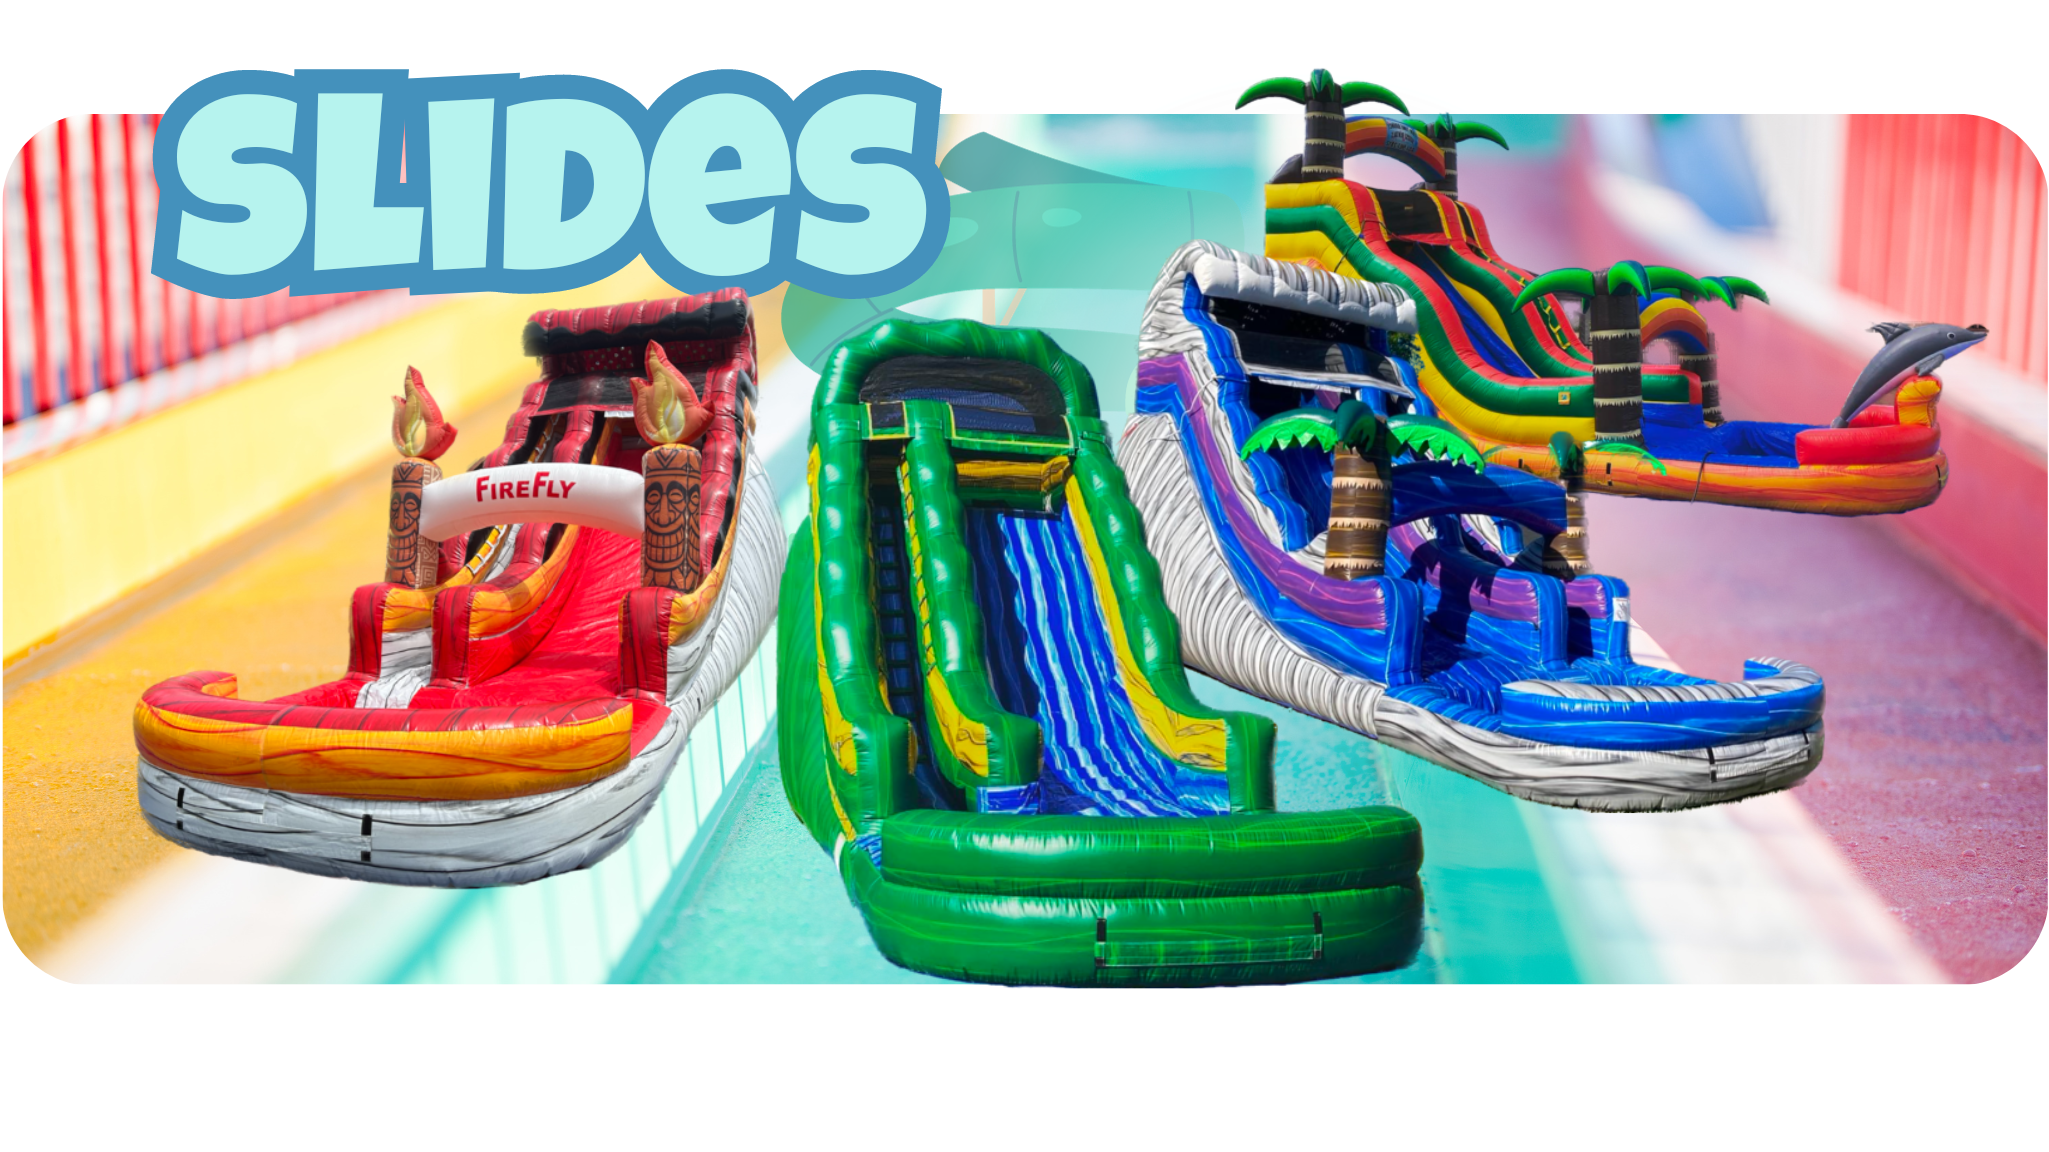 Get More Info On Water slides - Water slides